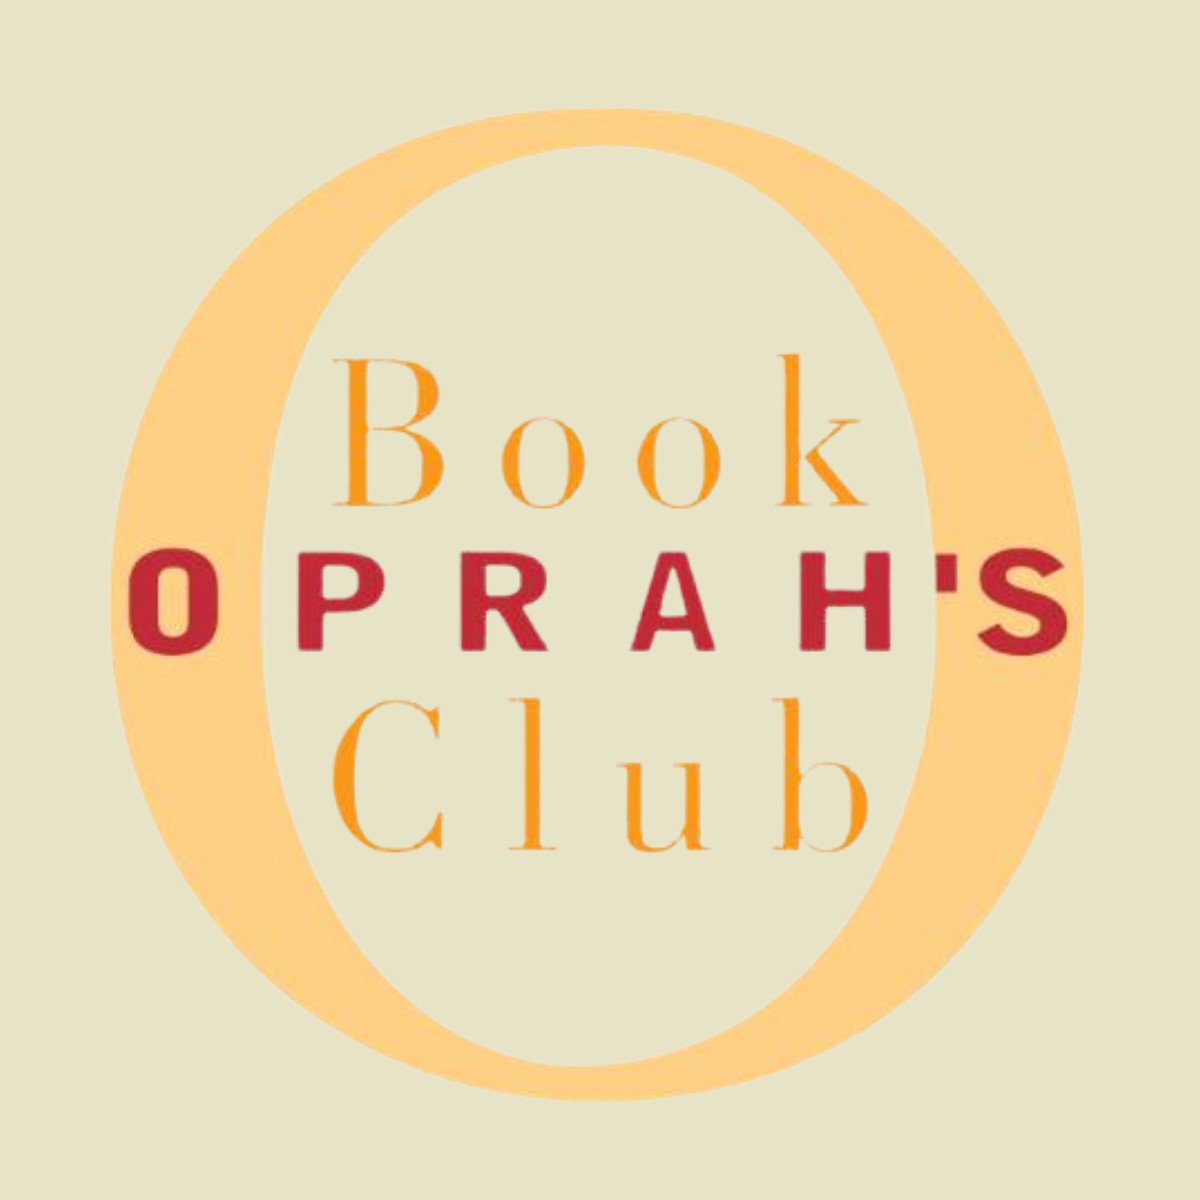 Full Oprah’s Book Club List + Printable PDF (Updated)